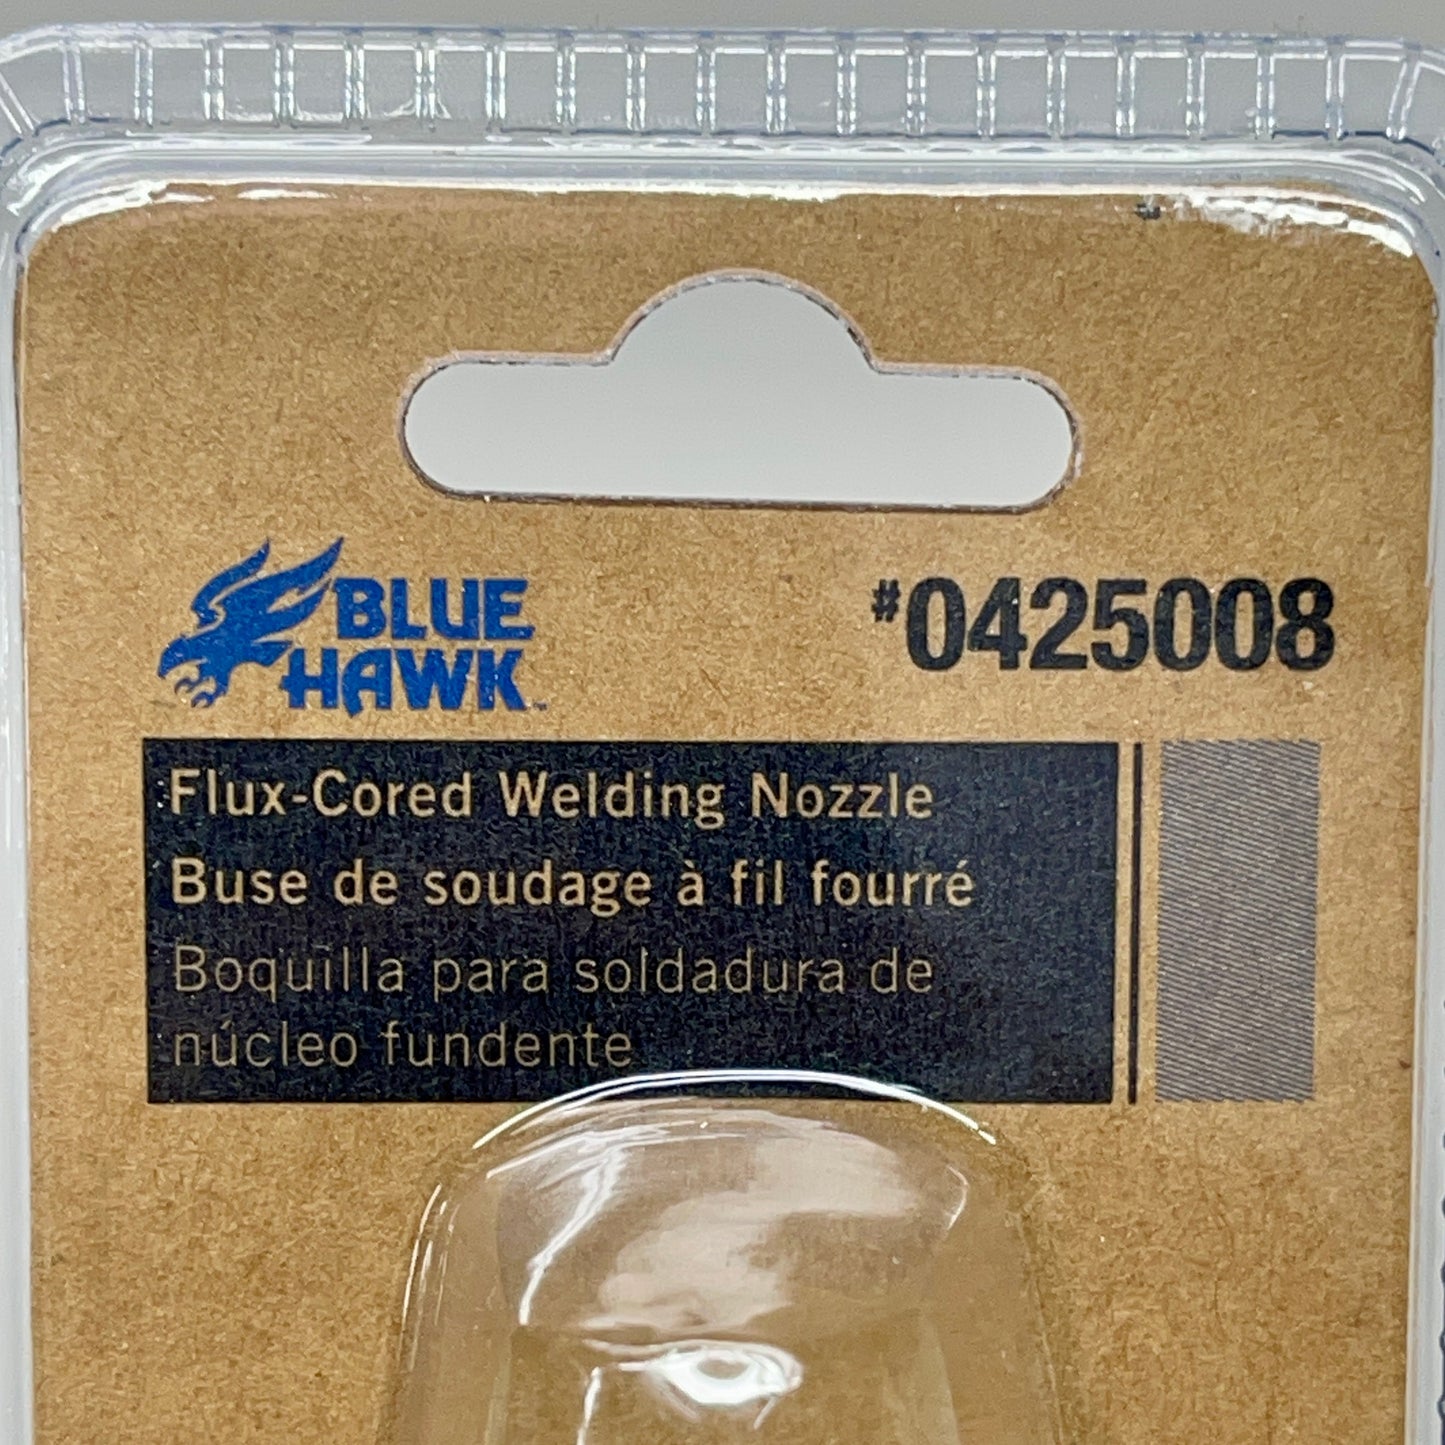 BLUE HAWK Flux-Cored Welding Nozzle Black 0425008